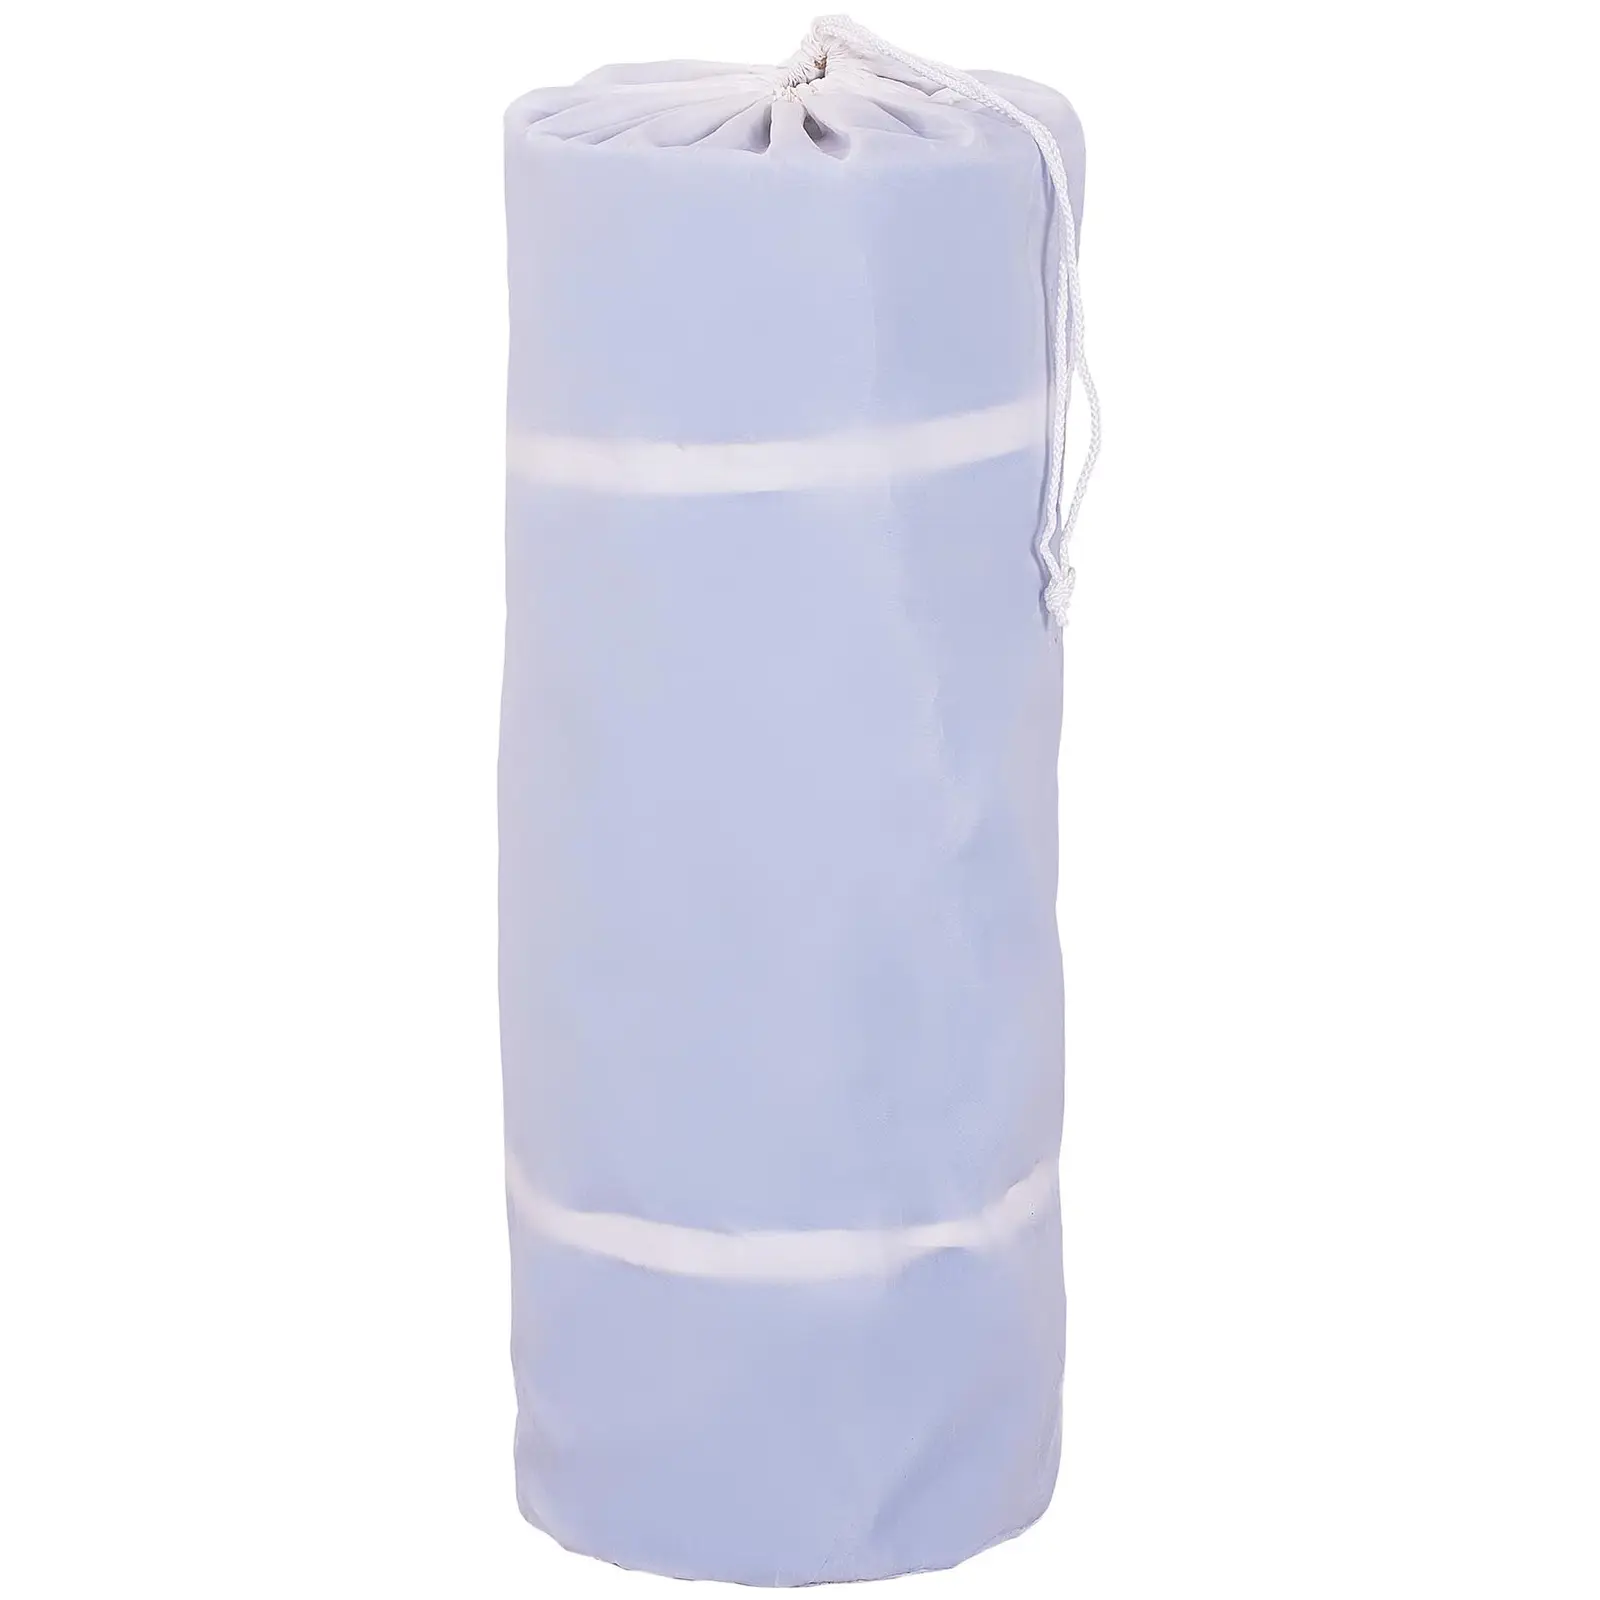 Uppblåsbar gymnastikmatta - 400 x 100 x 20 cm - blå och vit